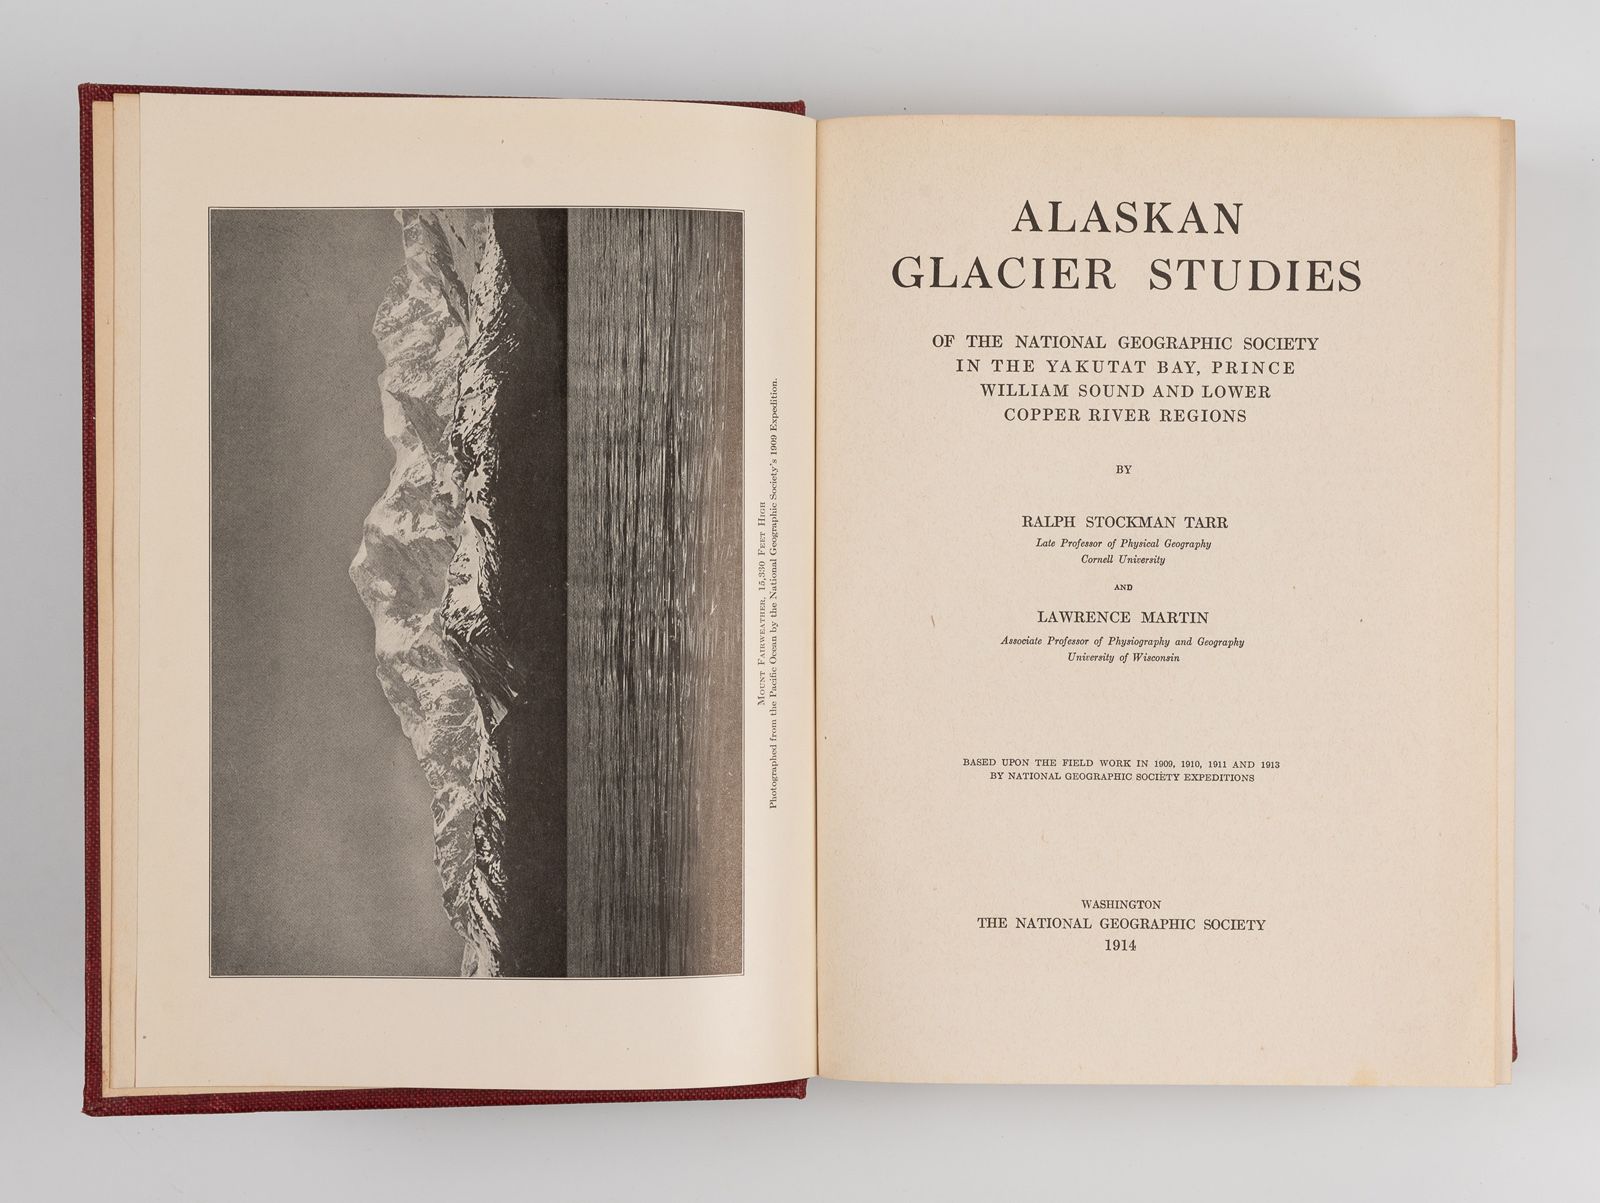 TARR et MARTIN. TARR和MARTIN。
阿拉斯加冰川研究。
华盛顿，国家地理学会，1914年。8开本，酒红色布面出版商。 
从1909年到19&hellip;